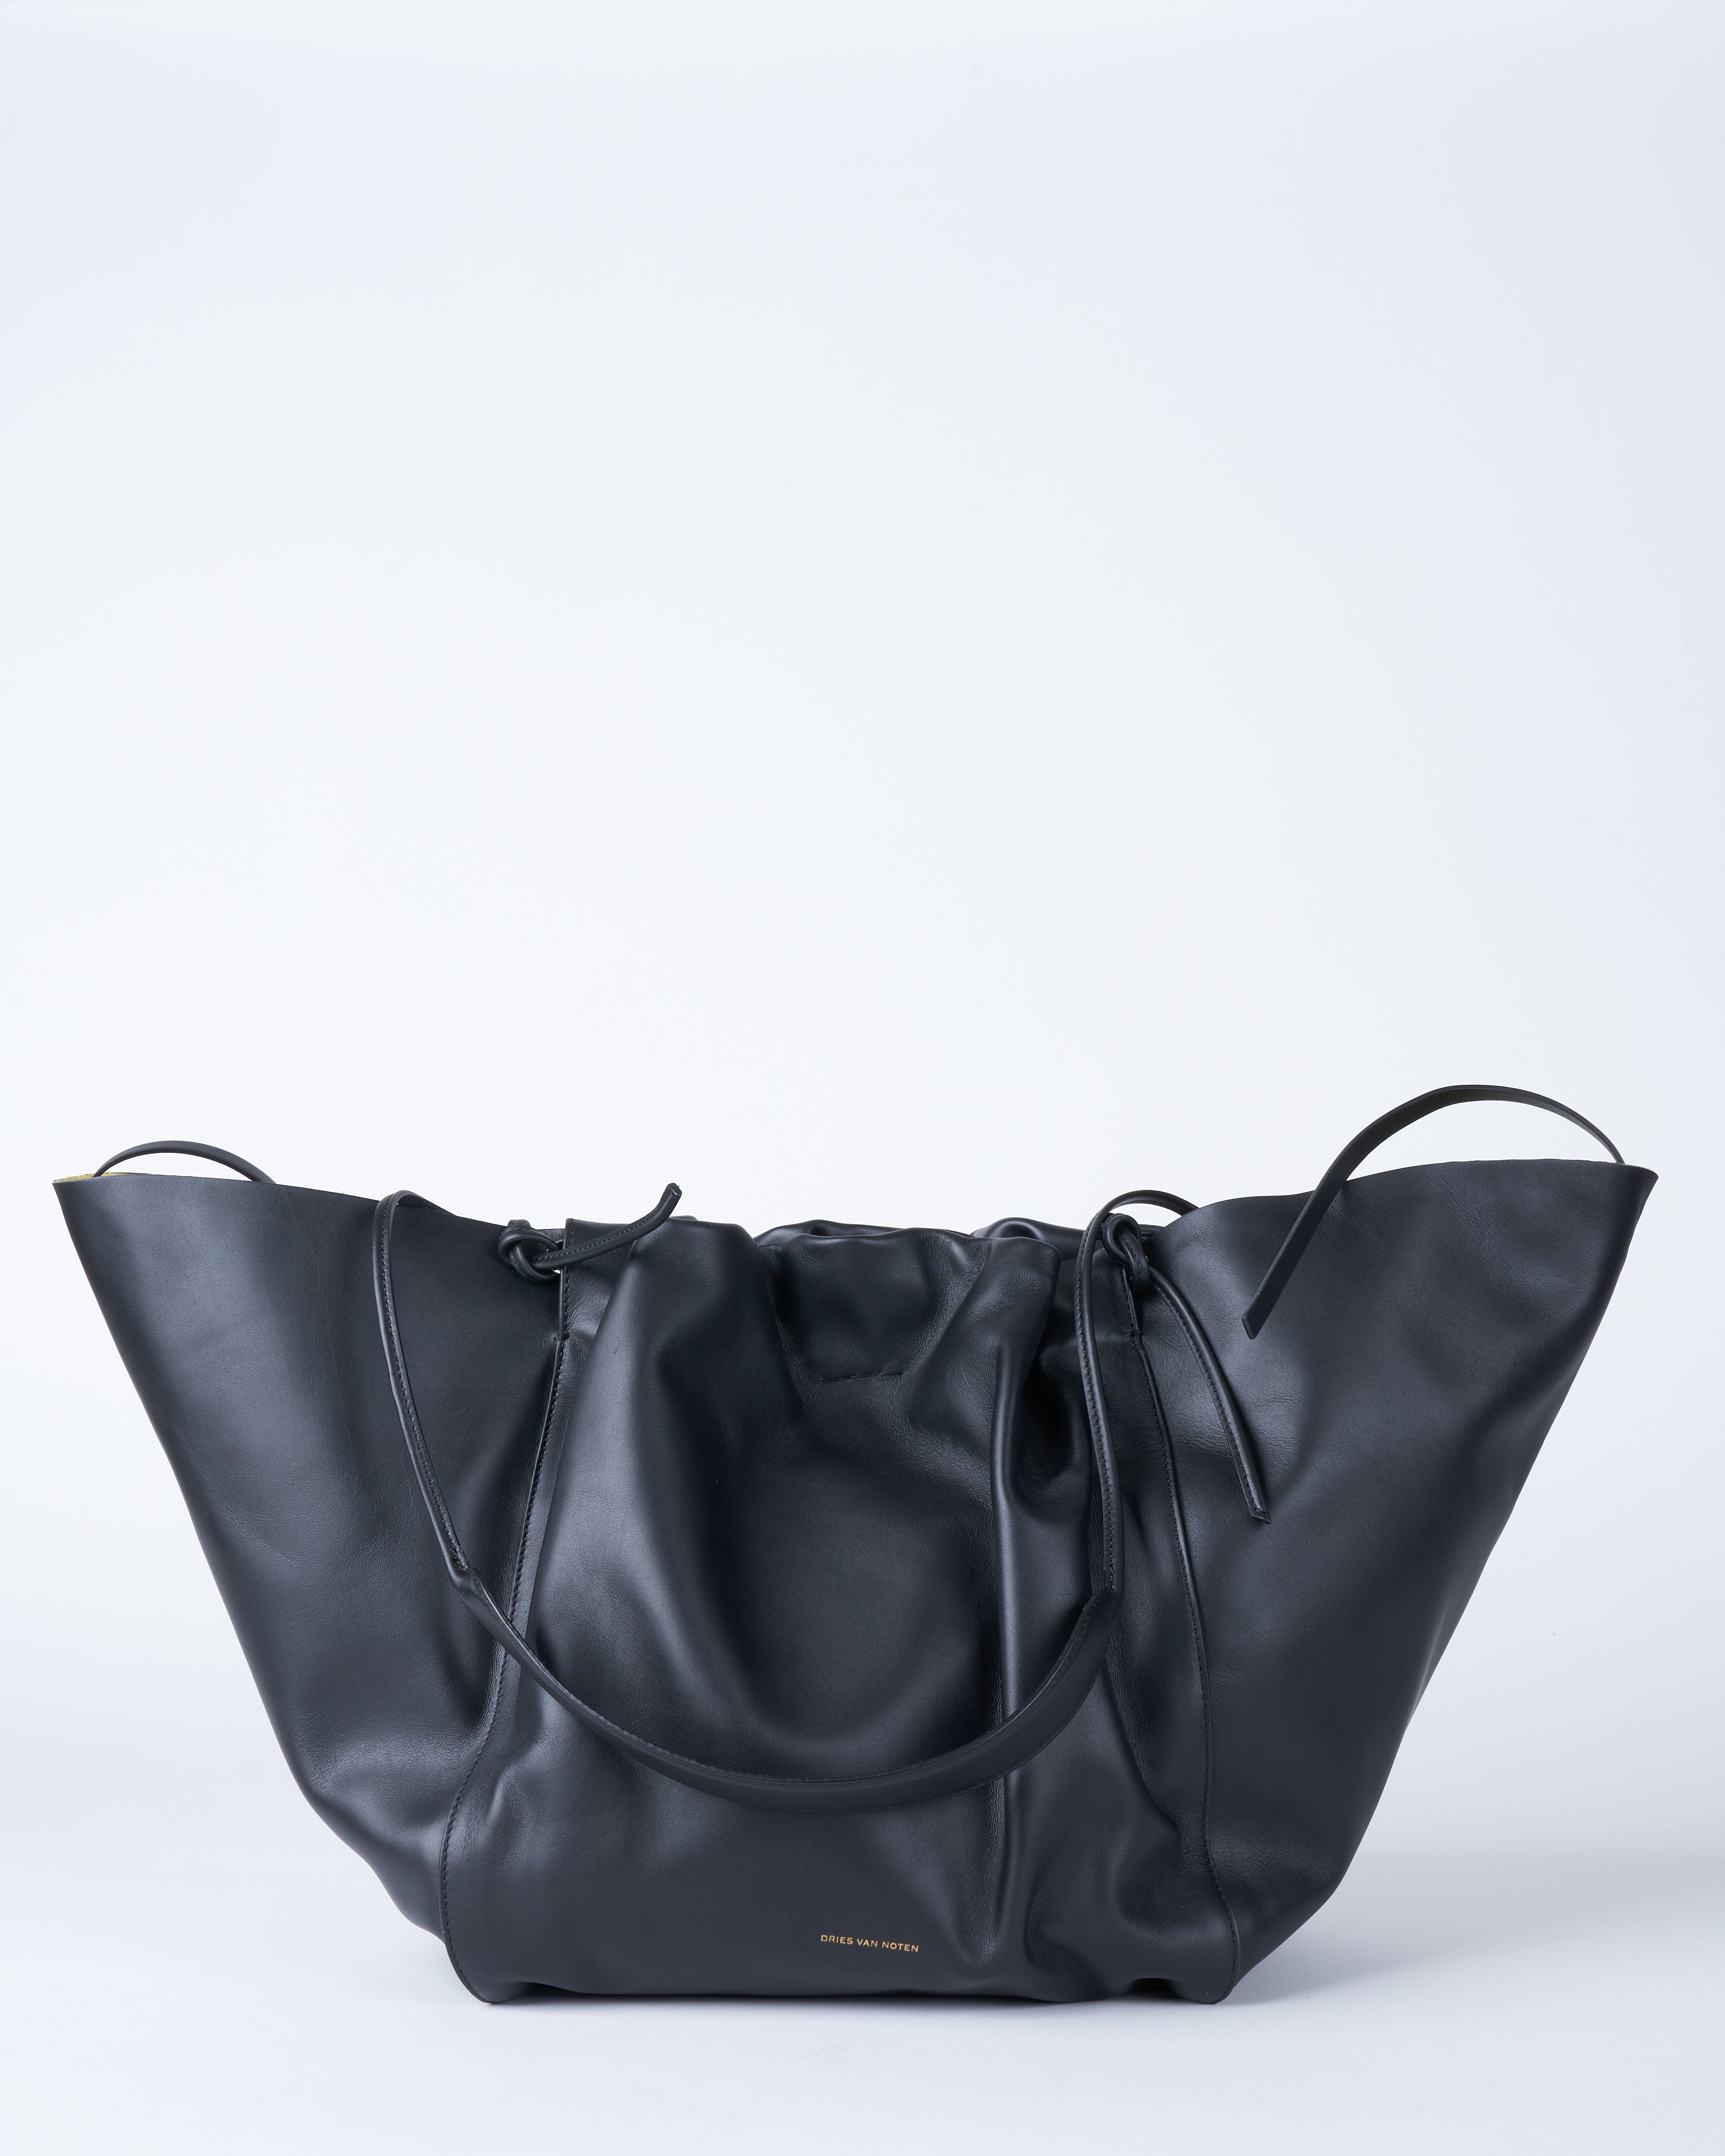 17100円買取 福岡 値下げ交渉 DRIES VAN NOTEN/Shoulder bag/Black